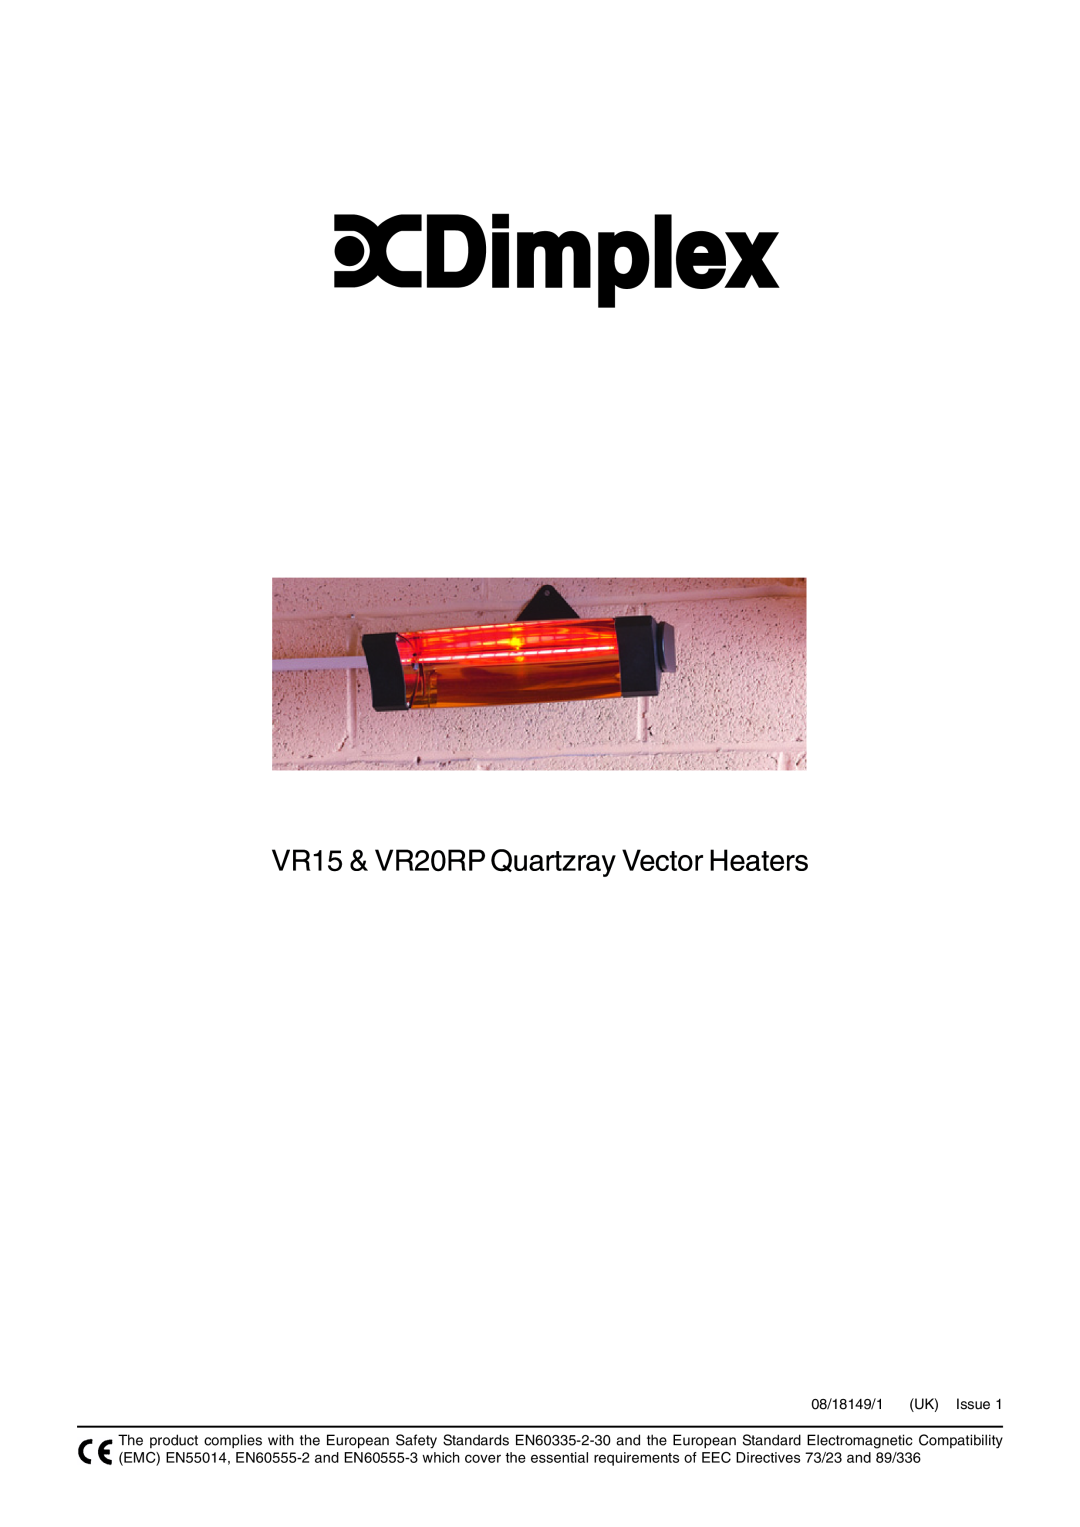 Dimplex manual VR15 & VR20RP Quartzray Vector Heaters, UK Issue, 08/18149/1 